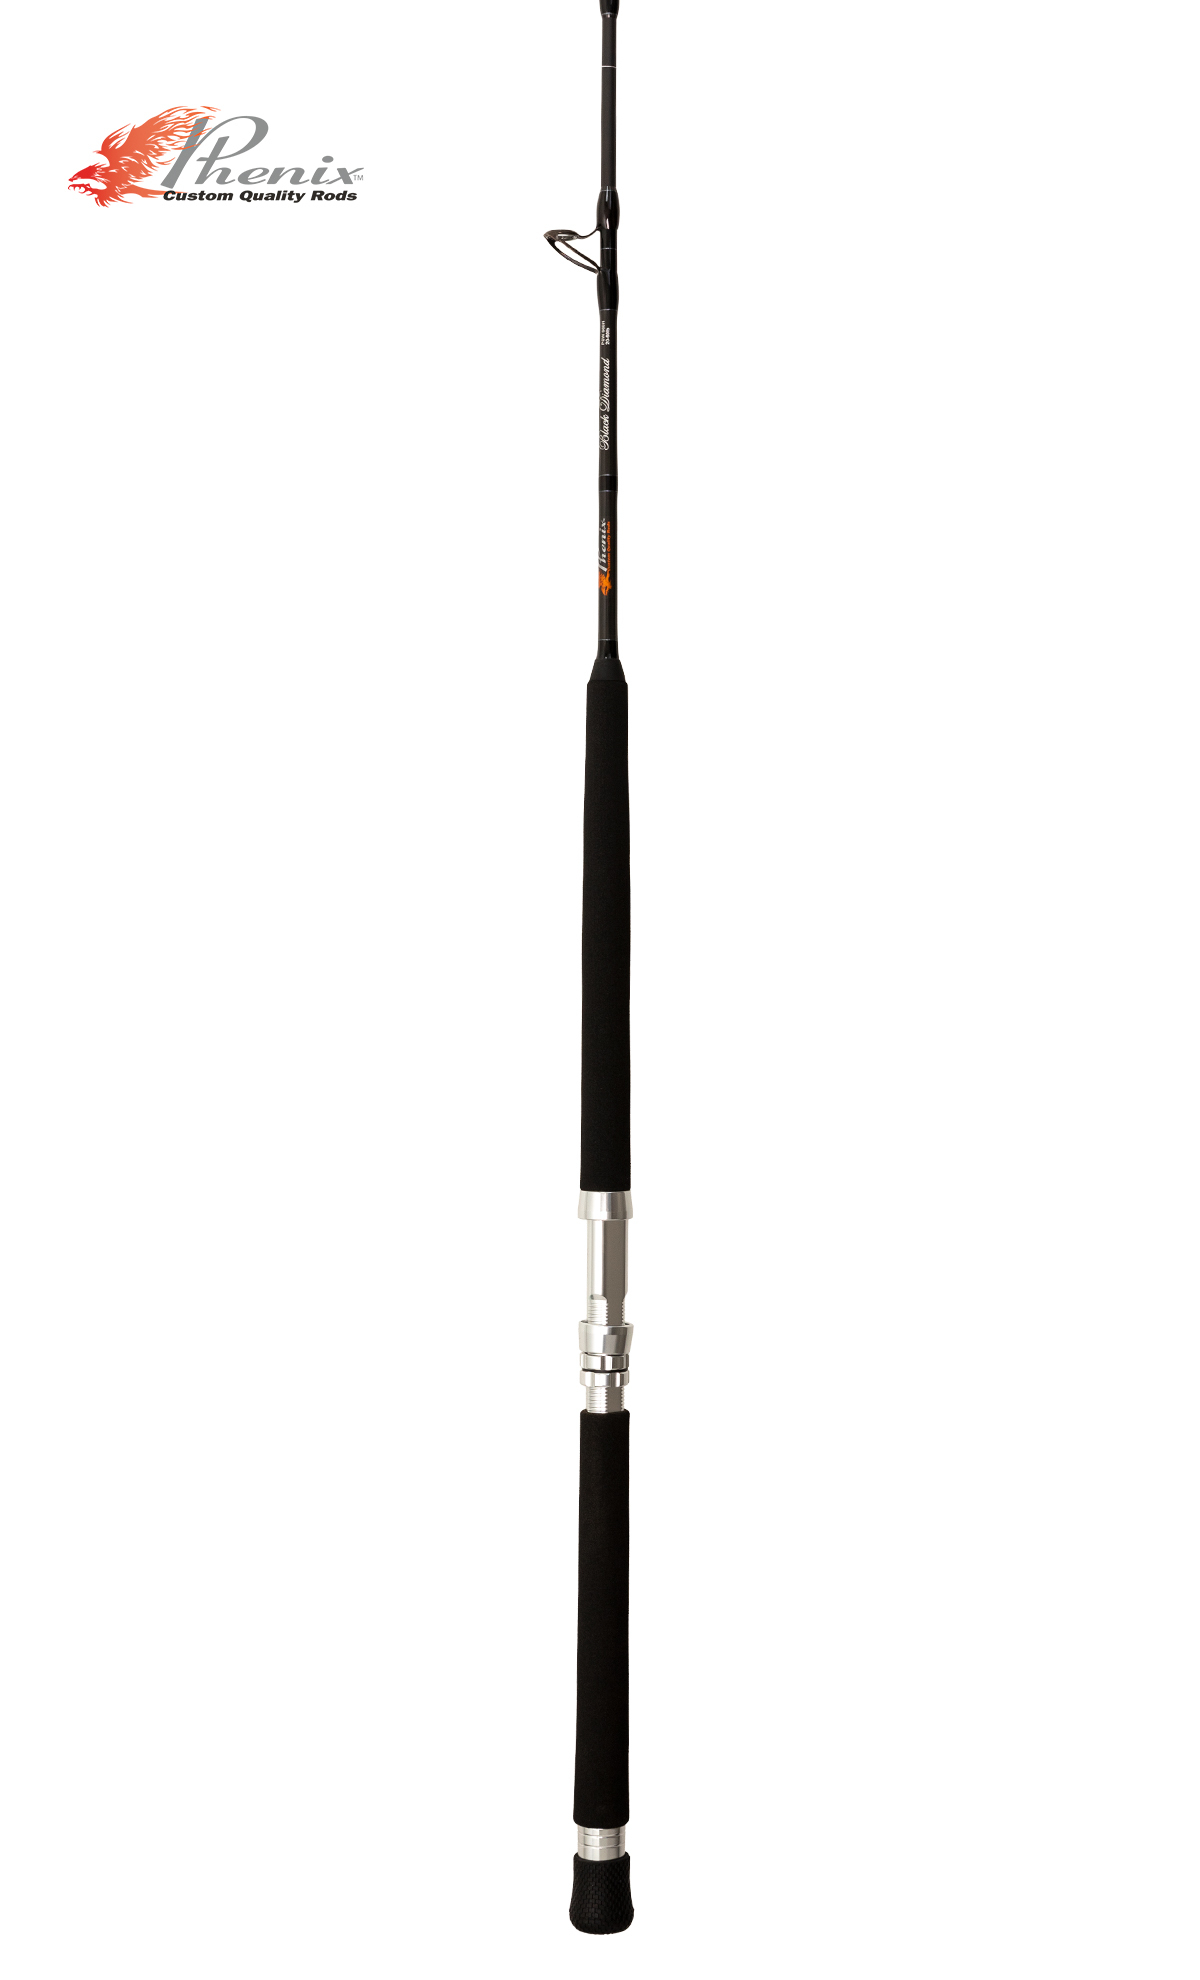 Phenix Black Diamond, Casting Rod, 20-60# Mod-Fast, 1 Pieces